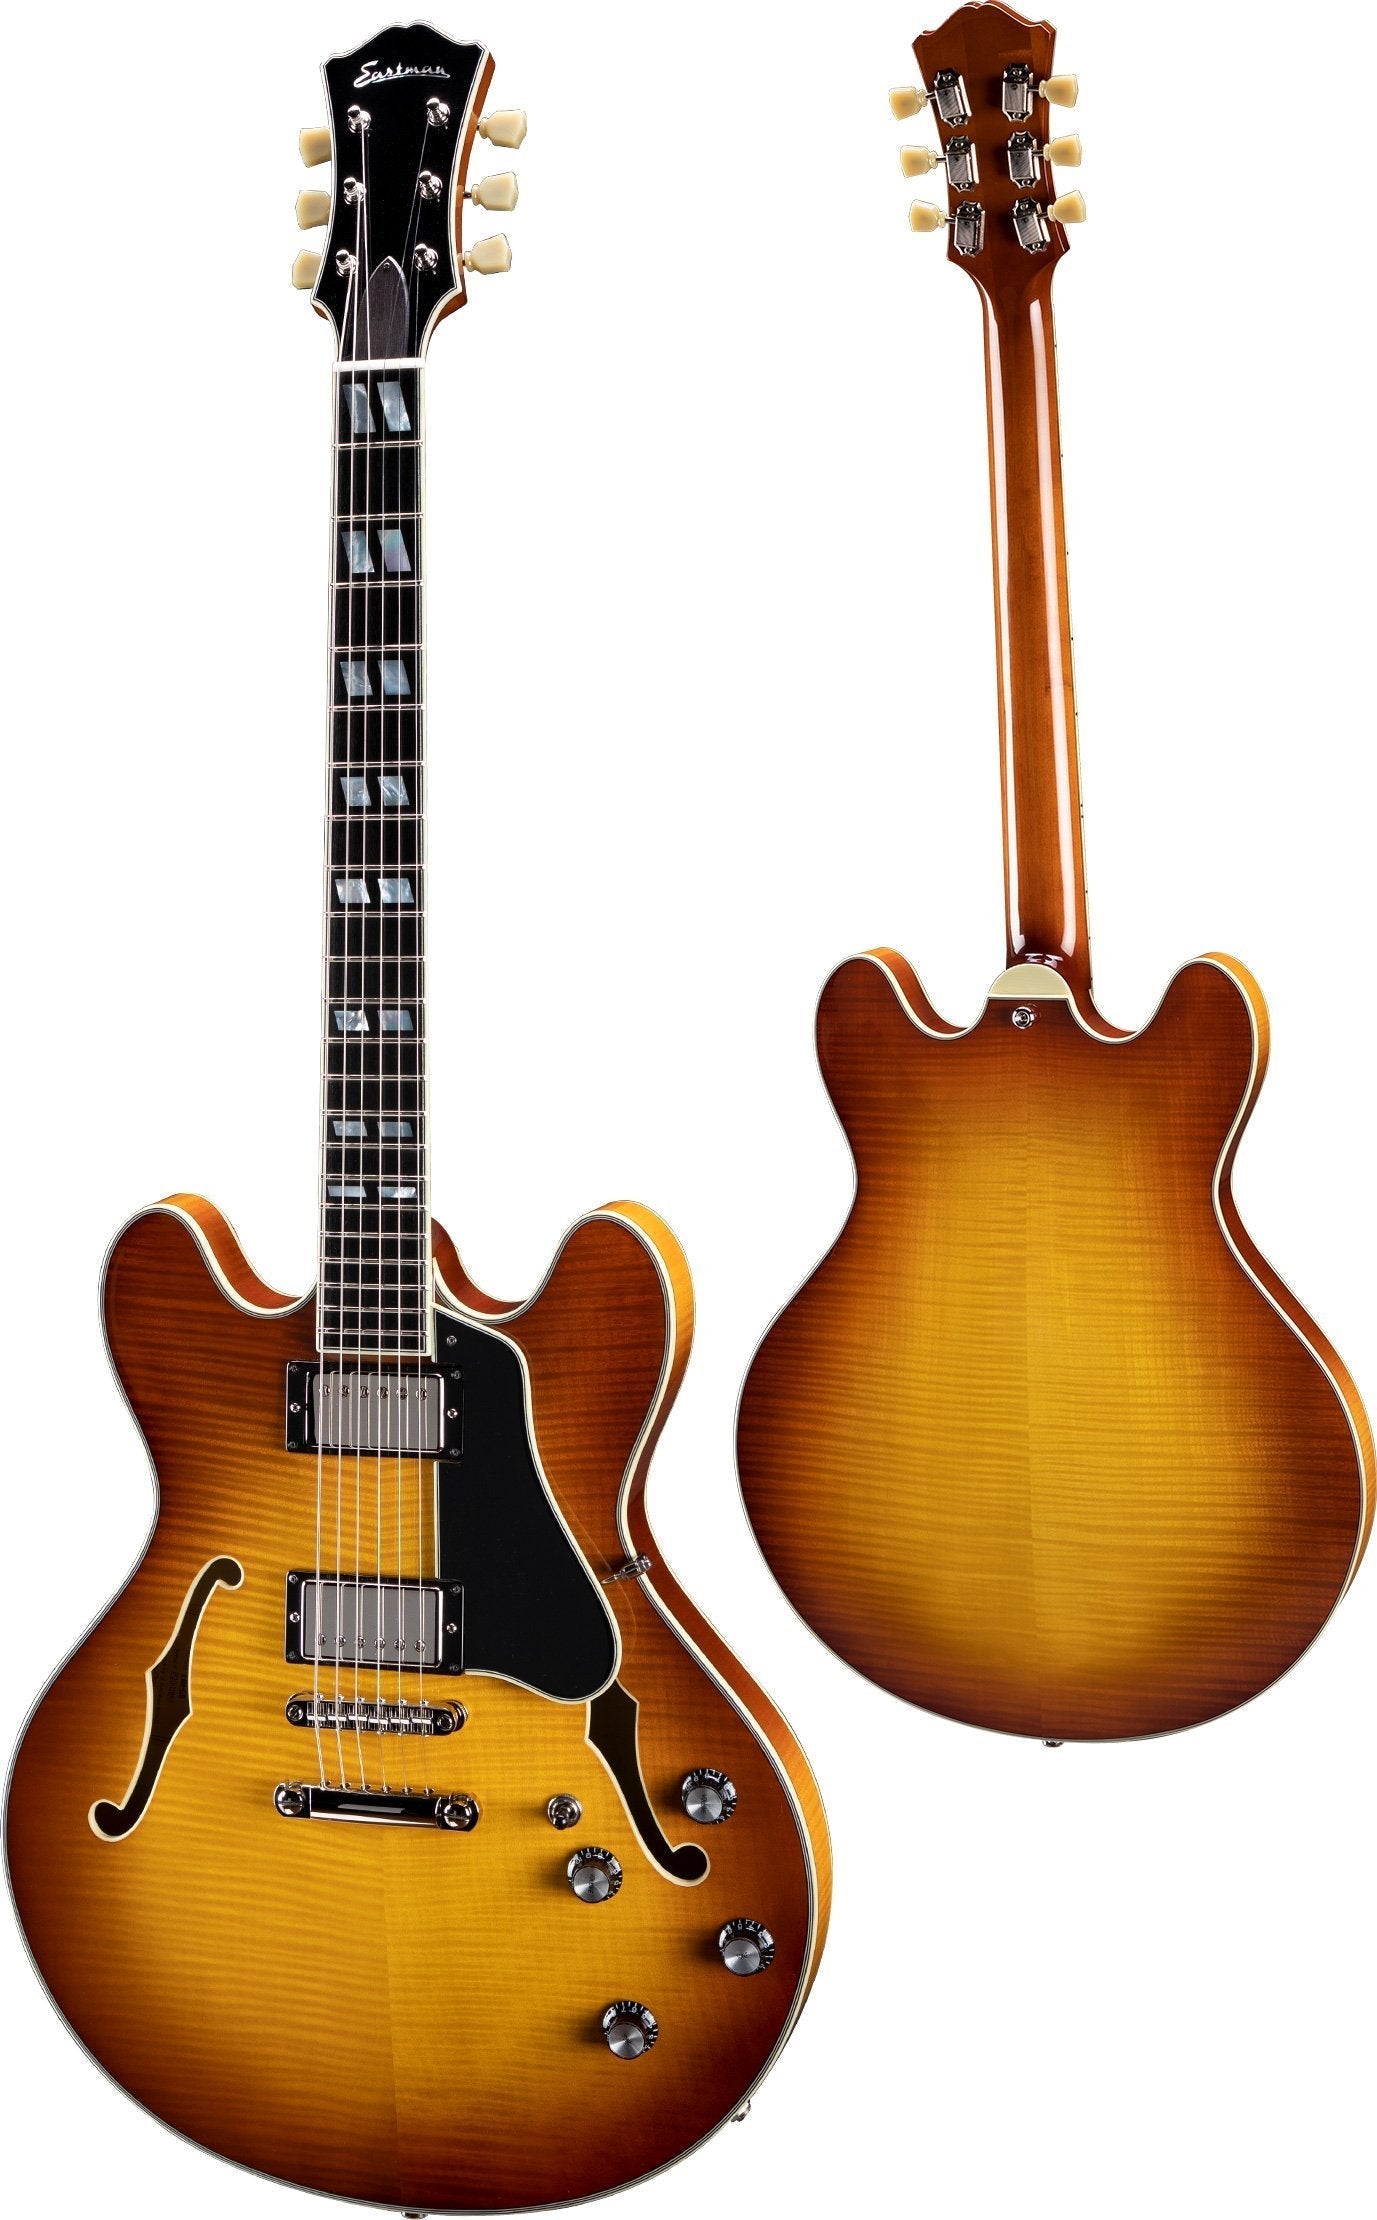 Eastman T486 Goldburst, Electric Guitar for sale at Richards Guitars.